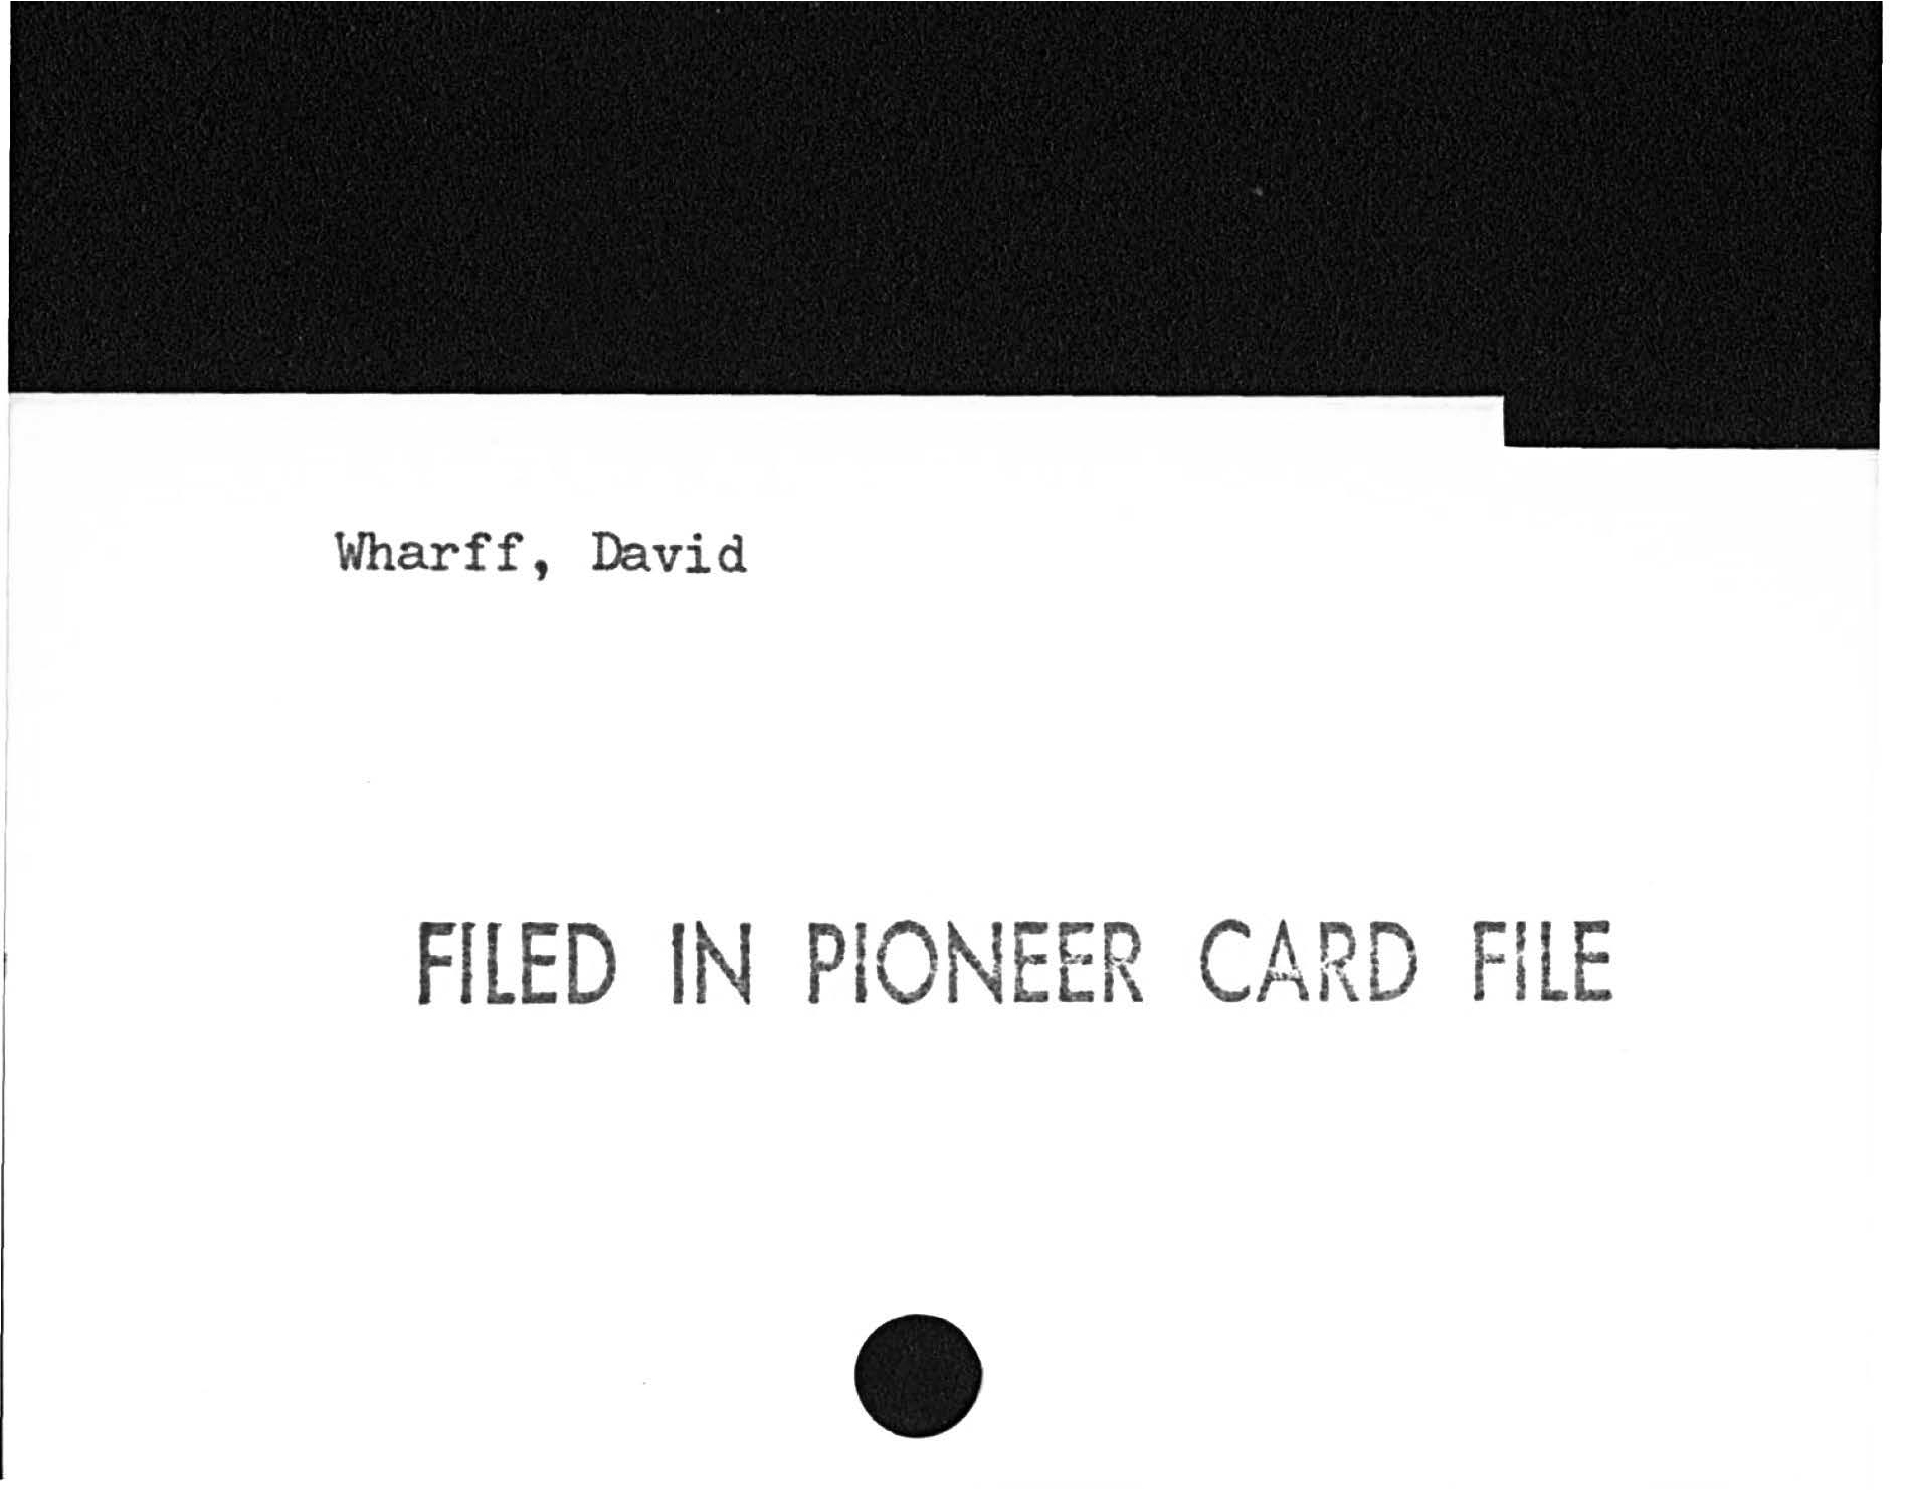 Wharff, DavidFILED IN PIONEER CARD FILED